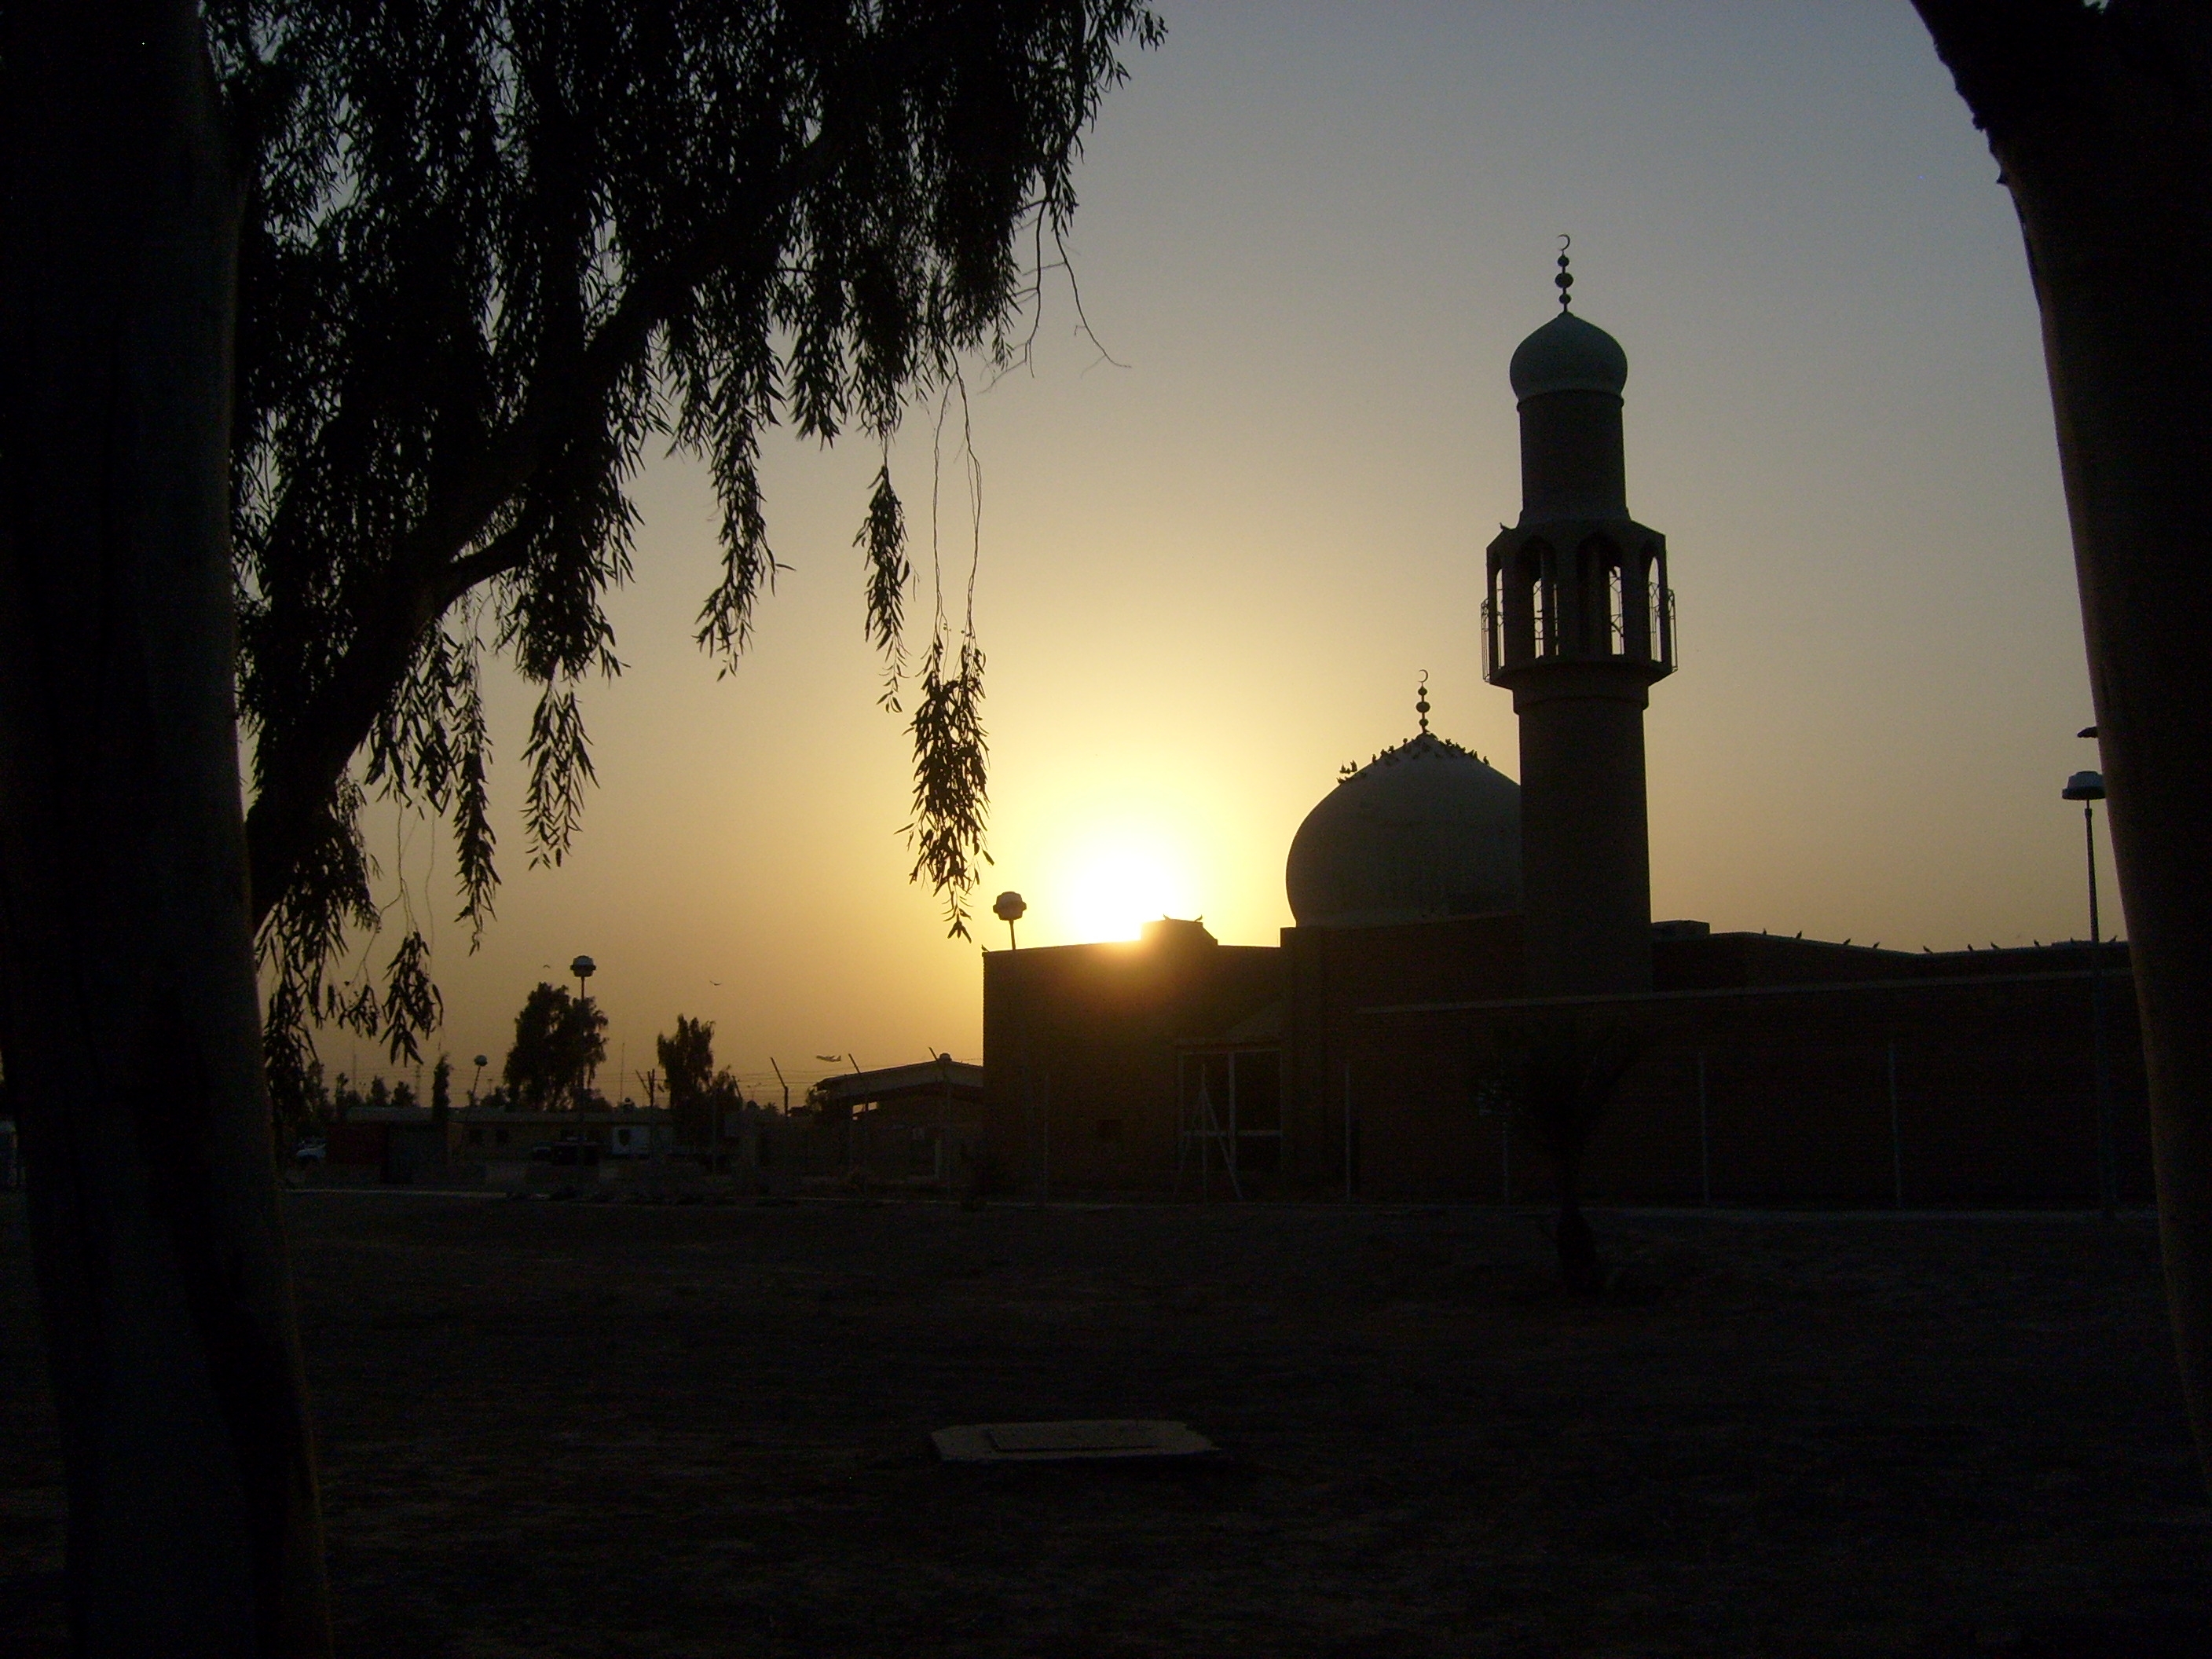 http://aaronbuzzard.files.wordpress.com/2009/11/iraq-sunset.jpg